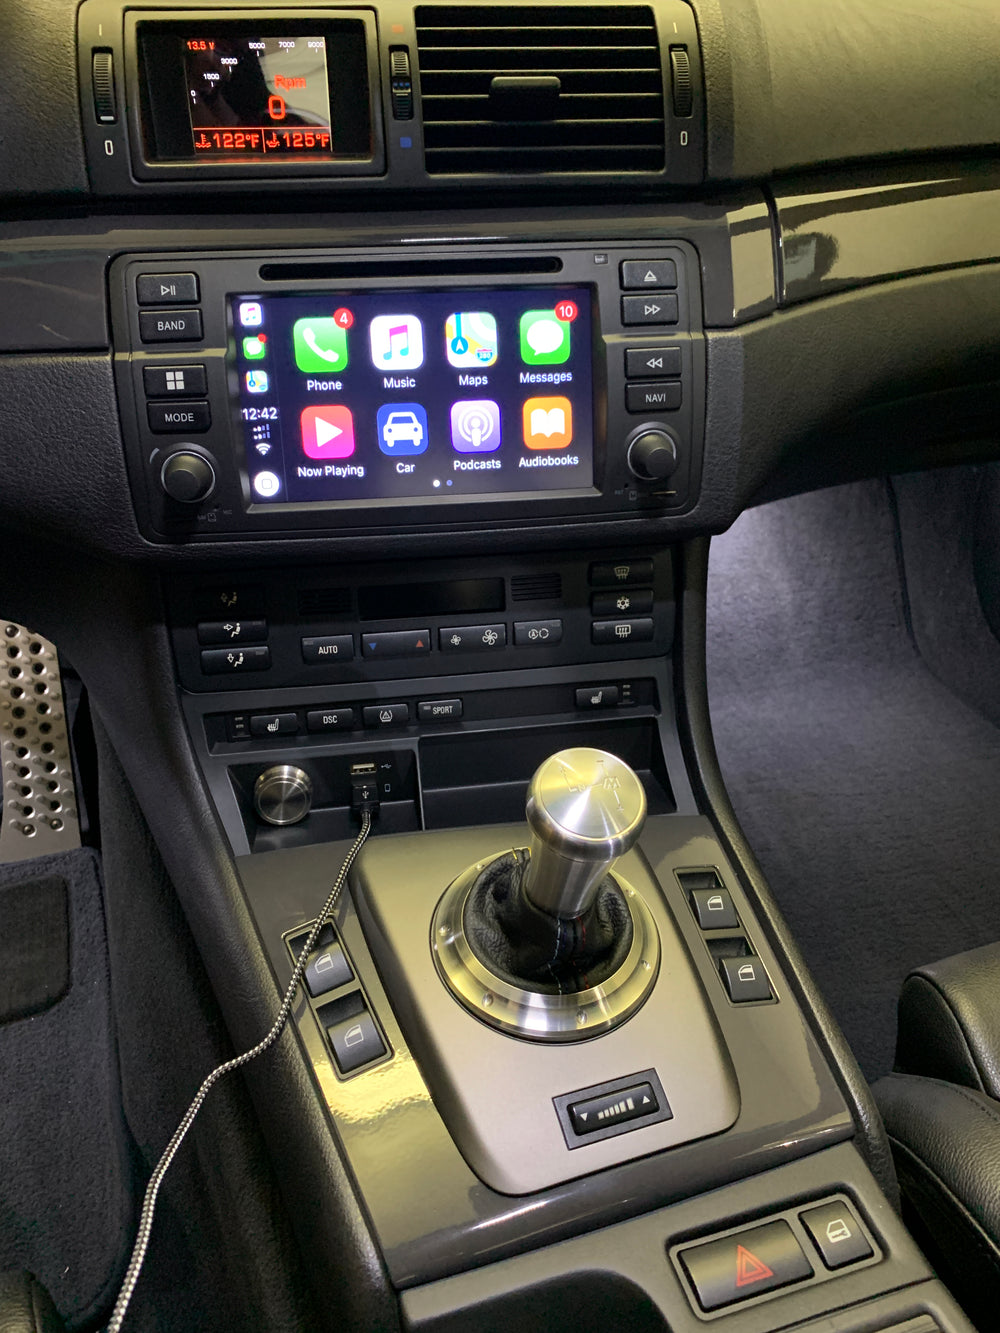 Radio / navigation system combination BMW 3 Touring (E46) buy 69.22 €